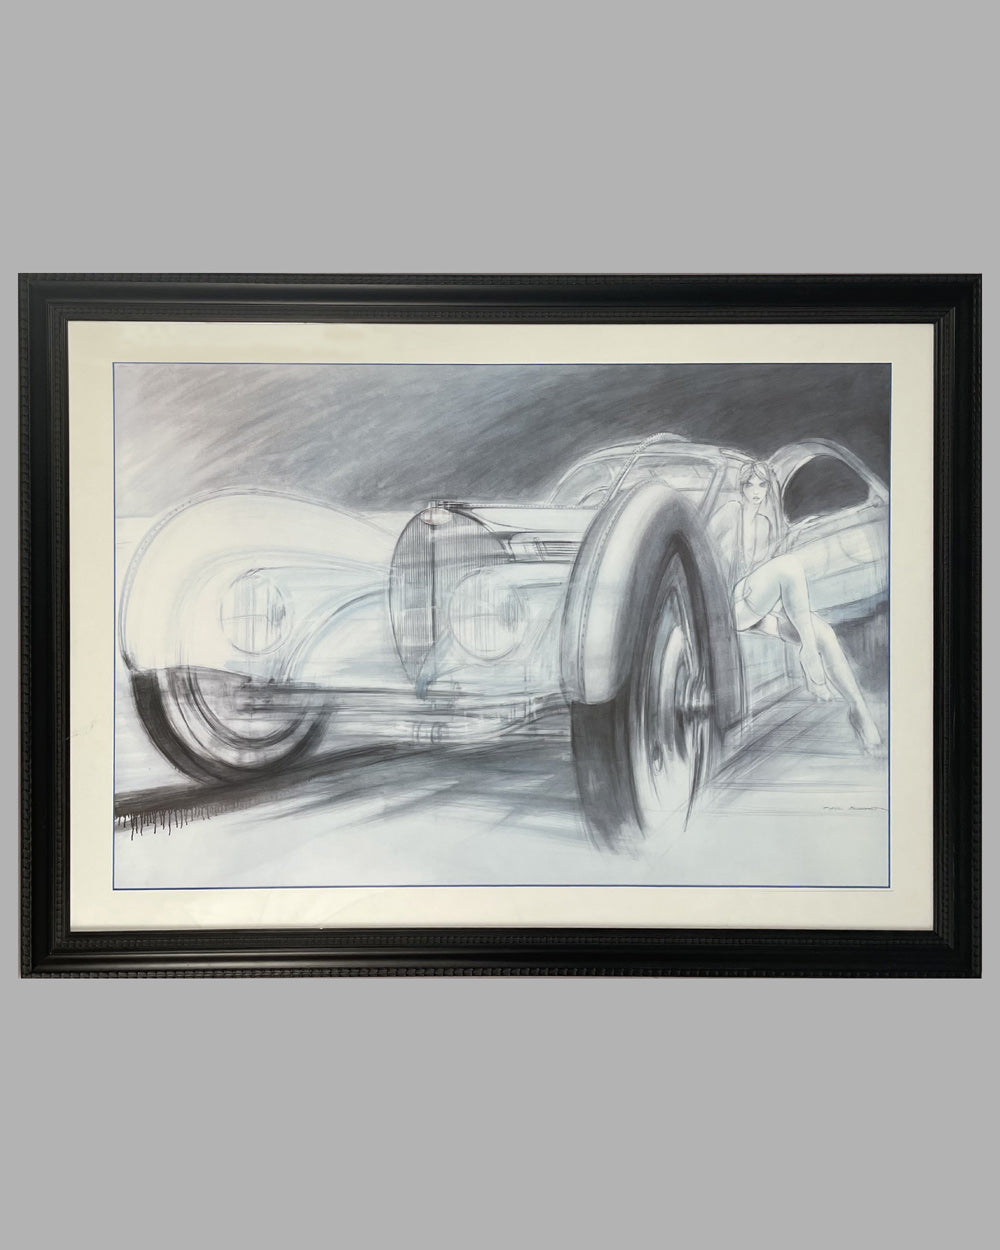 The Bugatti Atlantic by Paul Bouvot limited edition print